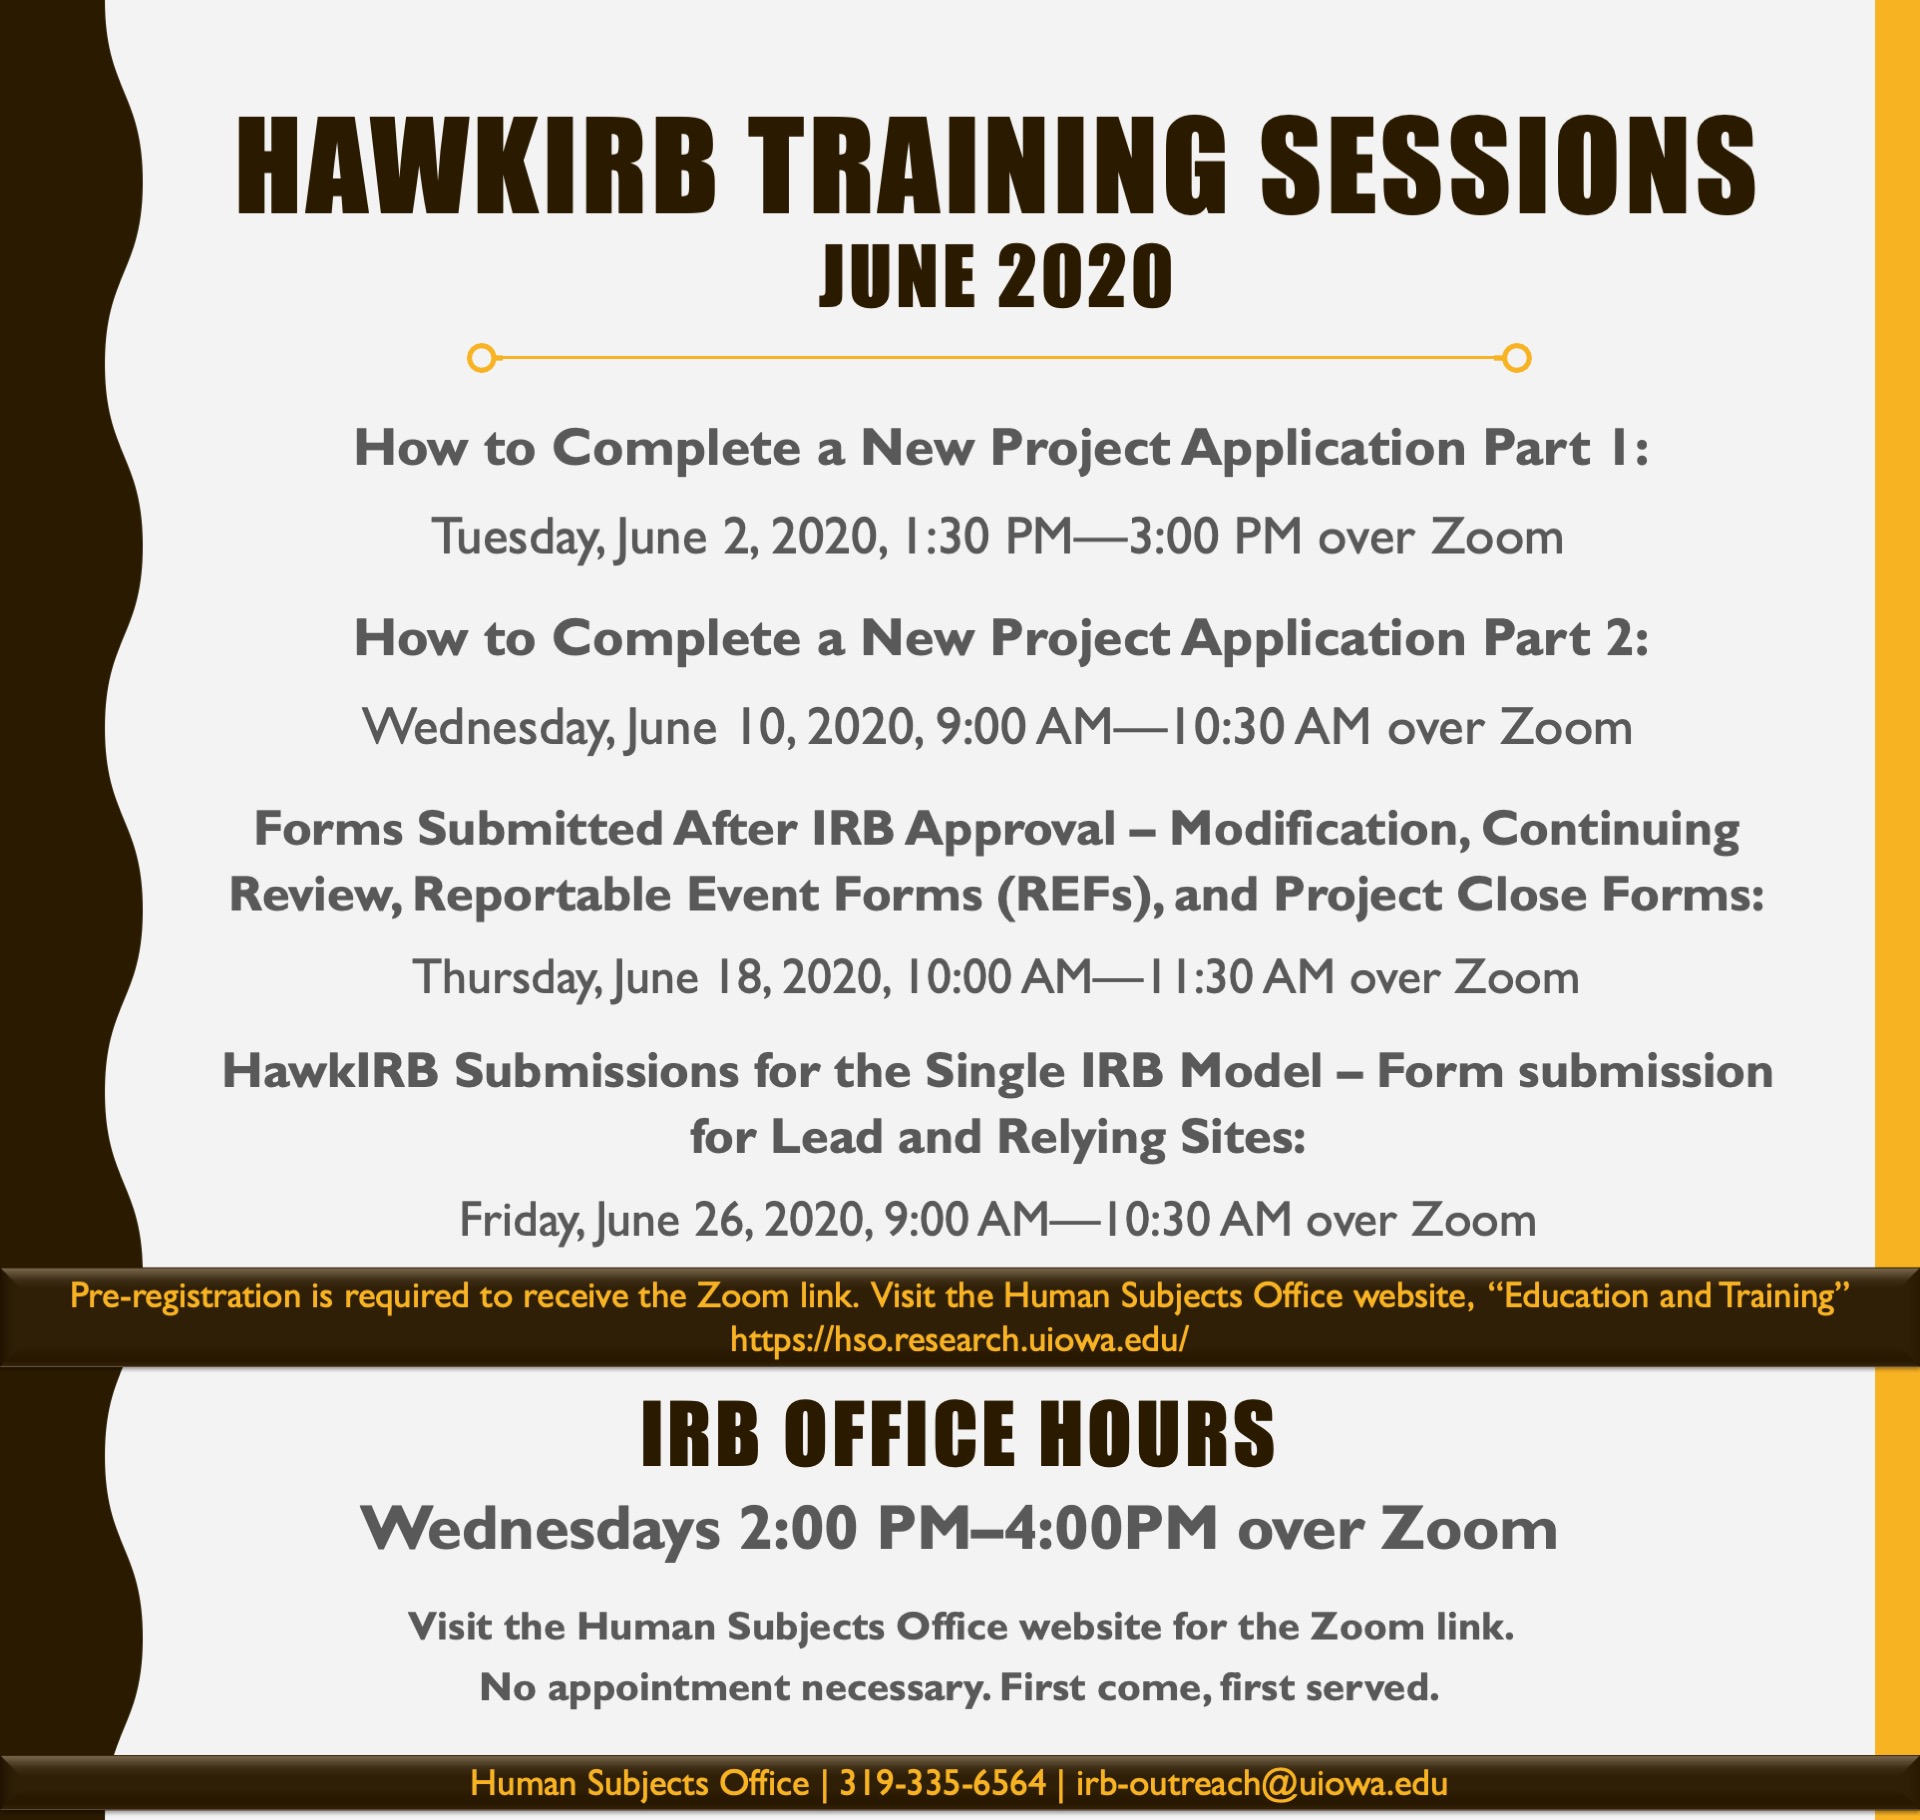 Hawkirb training sessions June 2020 